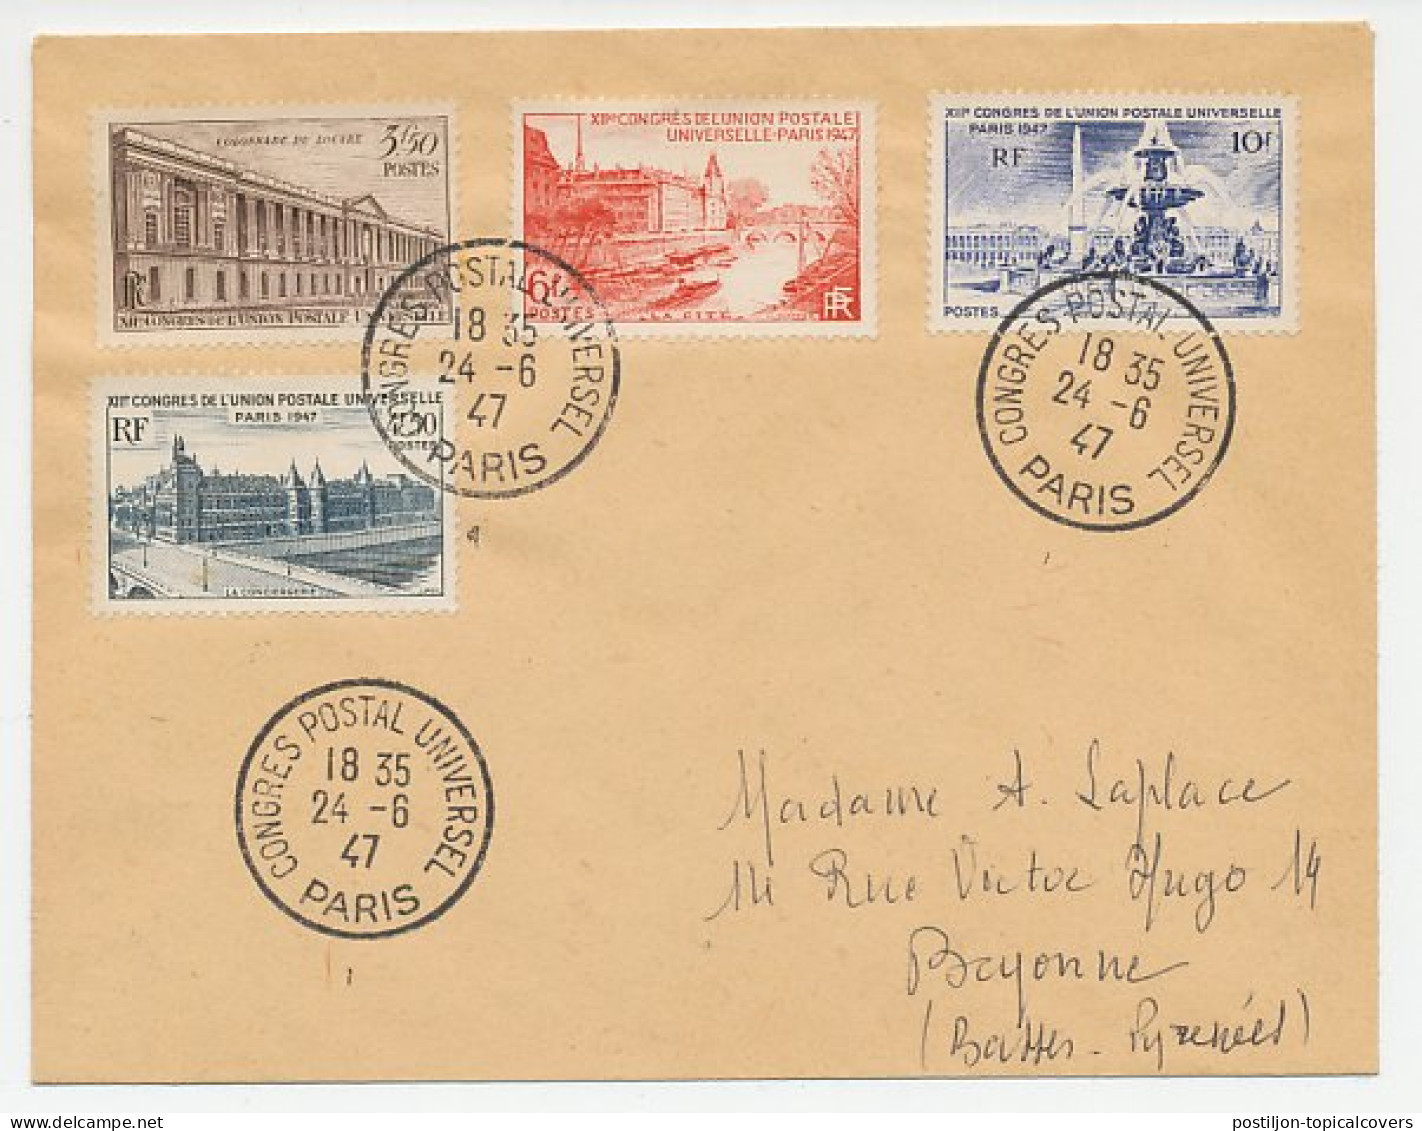 Card / Postmark France 1947 UPU - Postal Congress - UPU (Wereldpostunie)